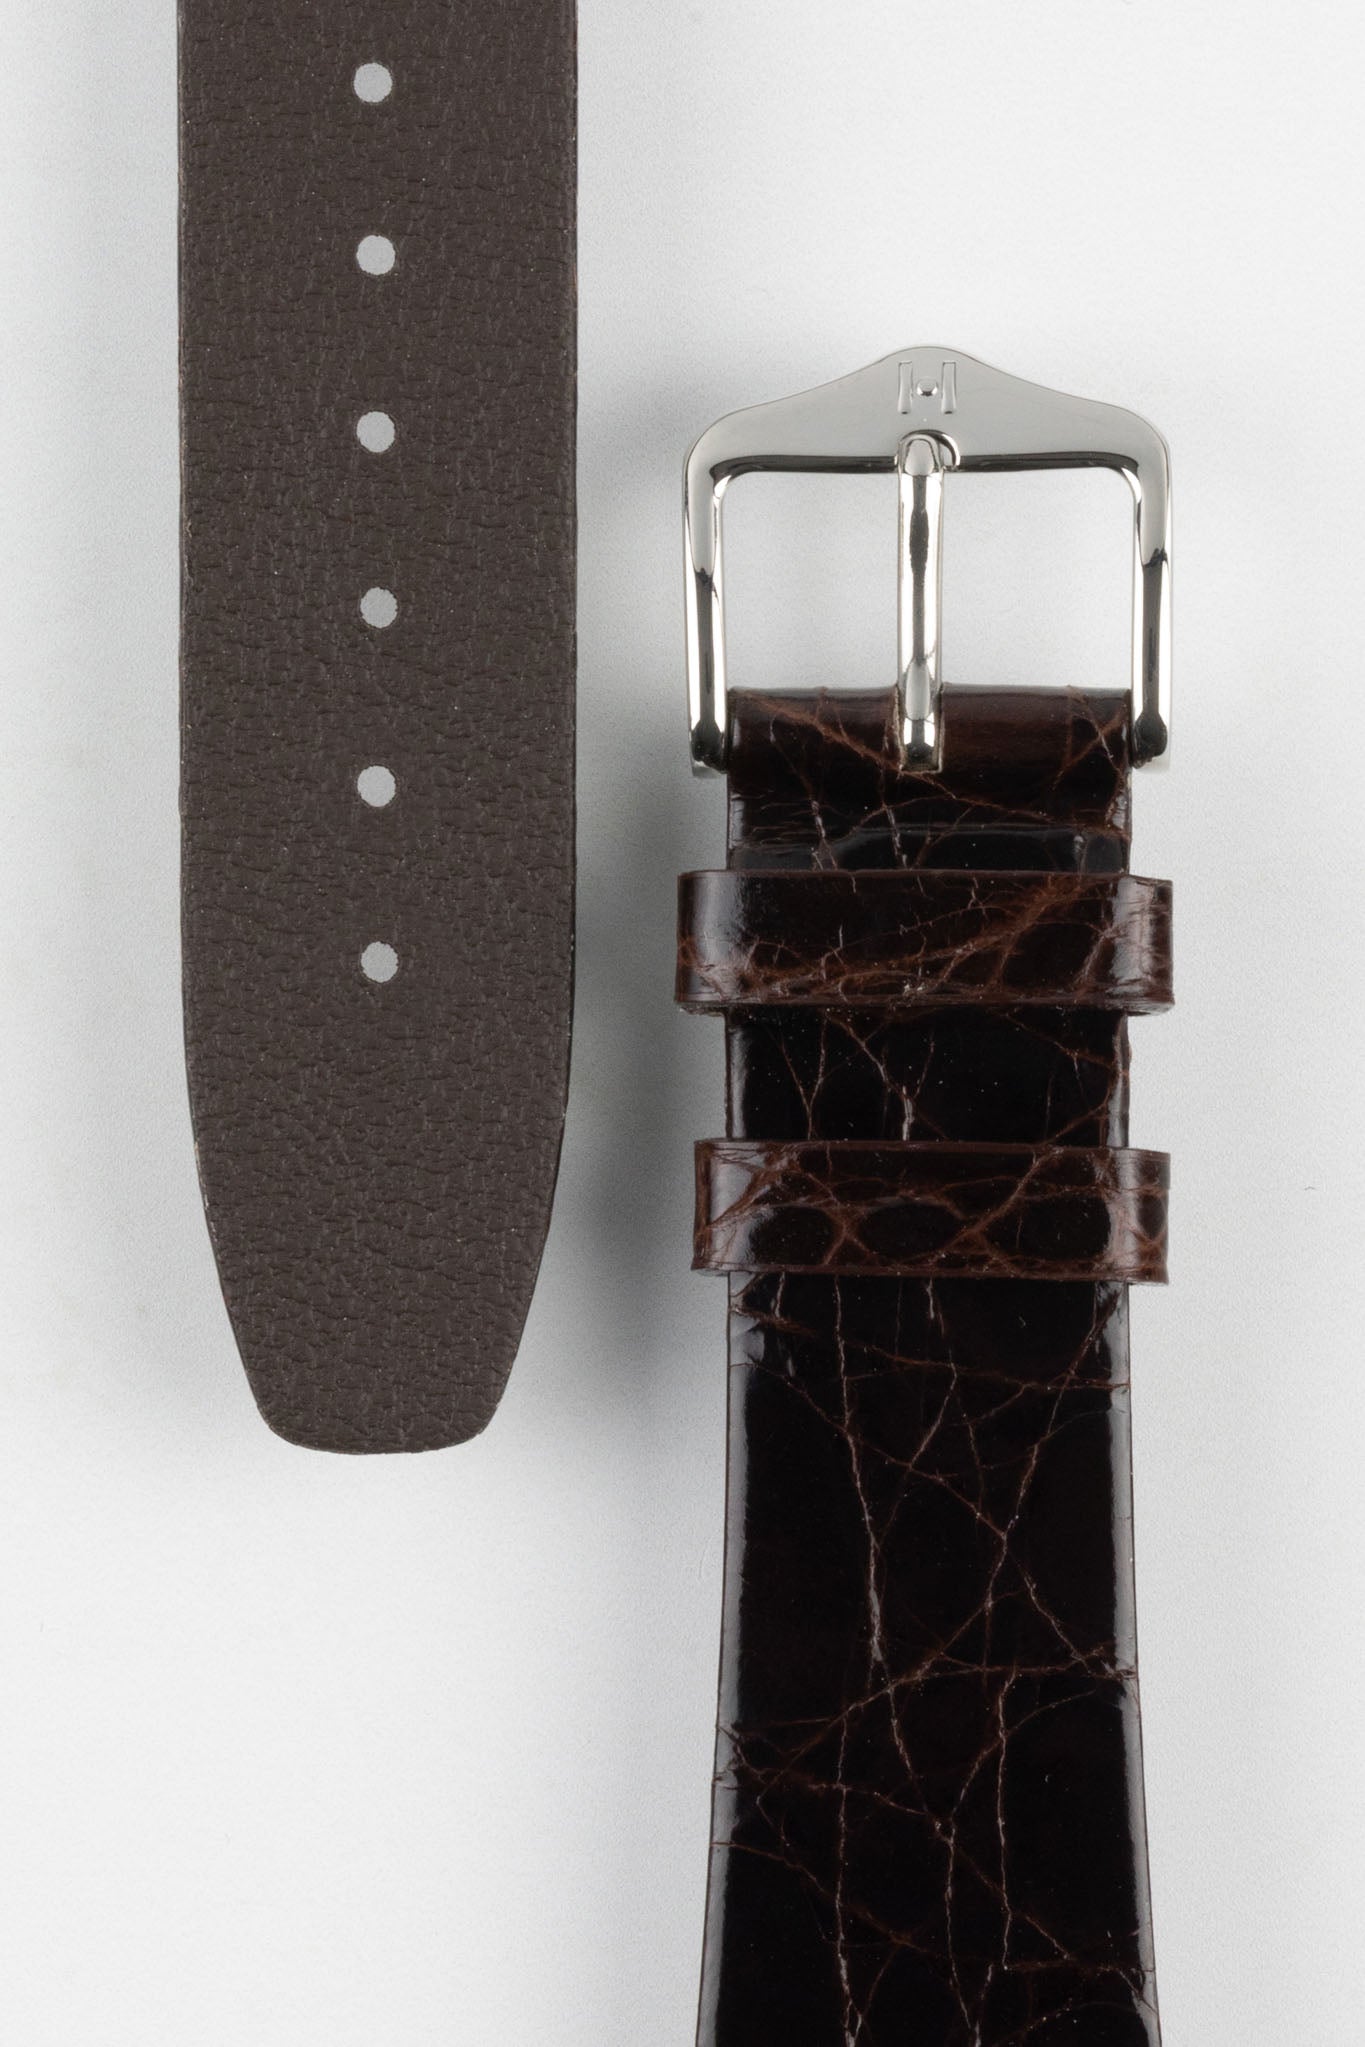 Hirsch PRESTIGE Shiny Genuine Crocodile Leather Watch Strap in BROWN